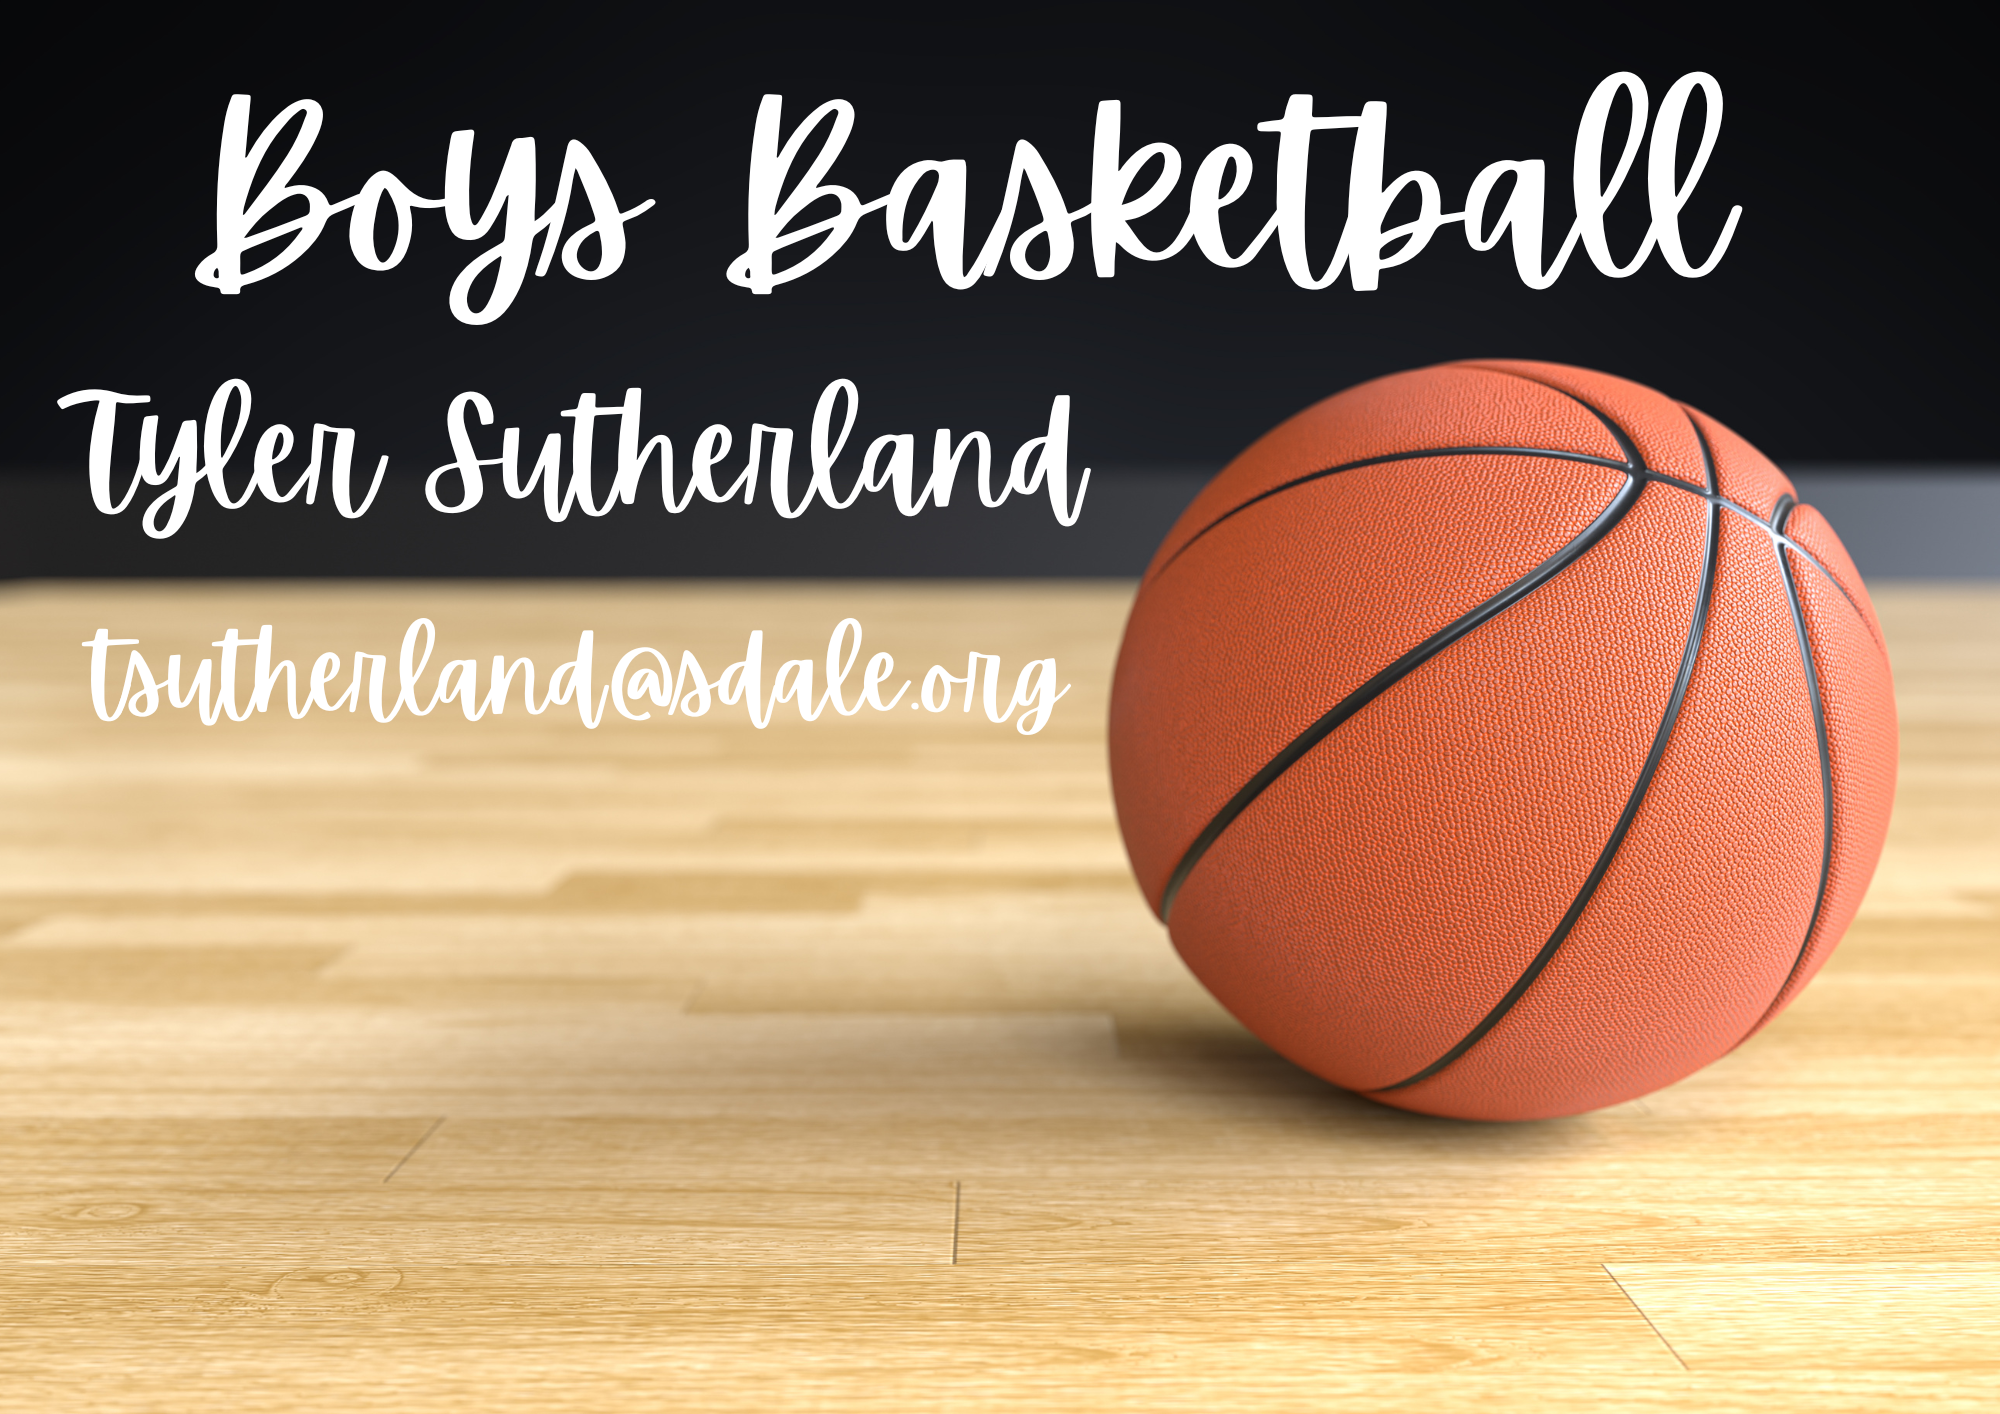 Basketball (Men's) - Tyler Sutherland - tsutherland@sdale.org